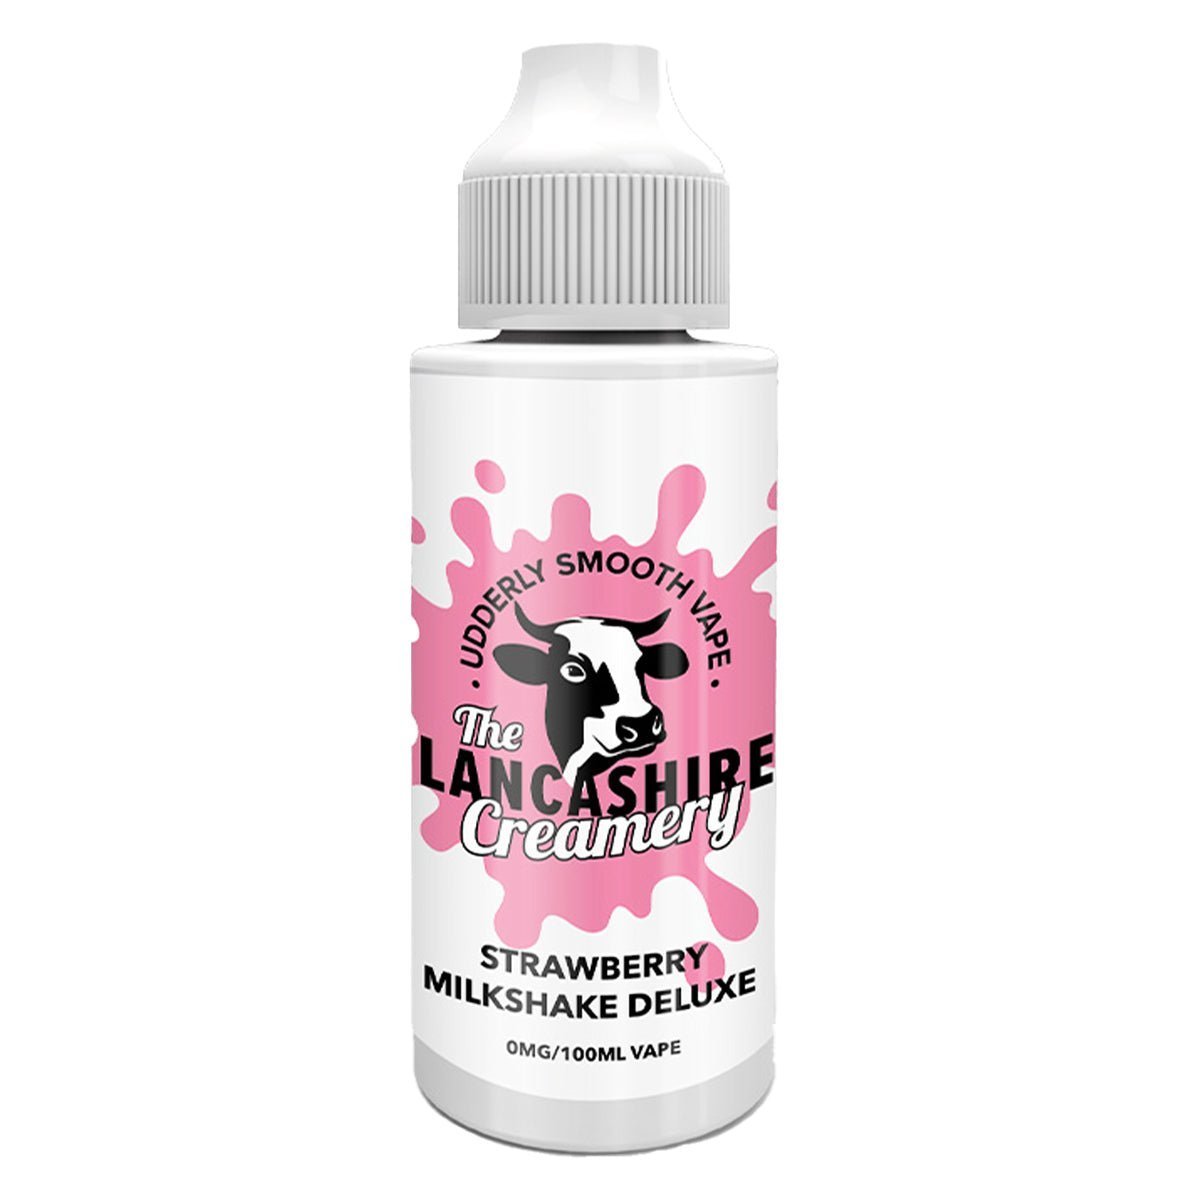 Strawberry Milkshake Deluxe 100ml Shortfill By The Lancashire Creamery - Manabush Eliquid - Tobacco E-liquid and Vape Juice